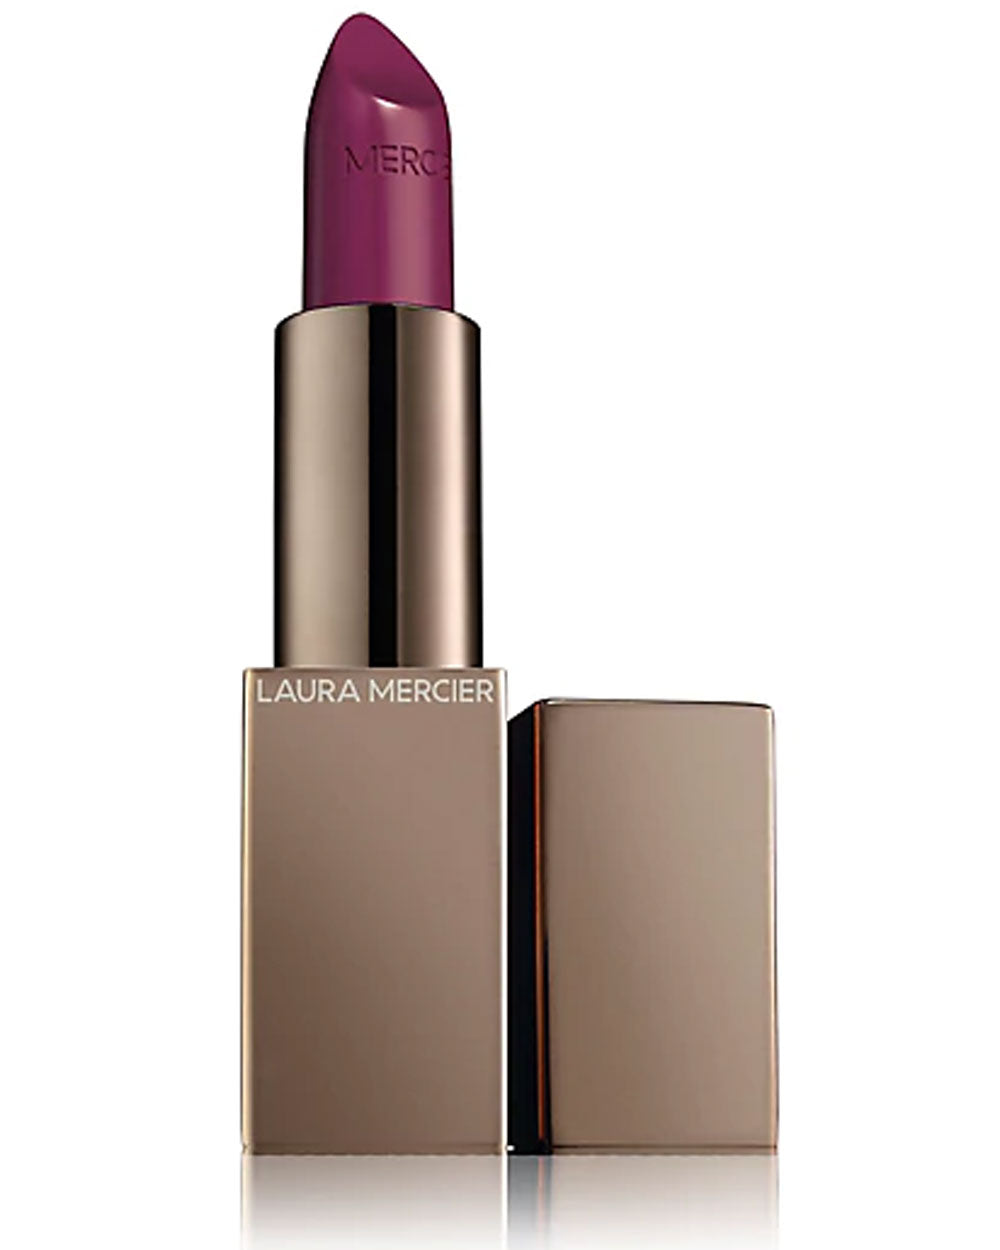 Rouge Essentiel Silky Creme Lipstick in Violette